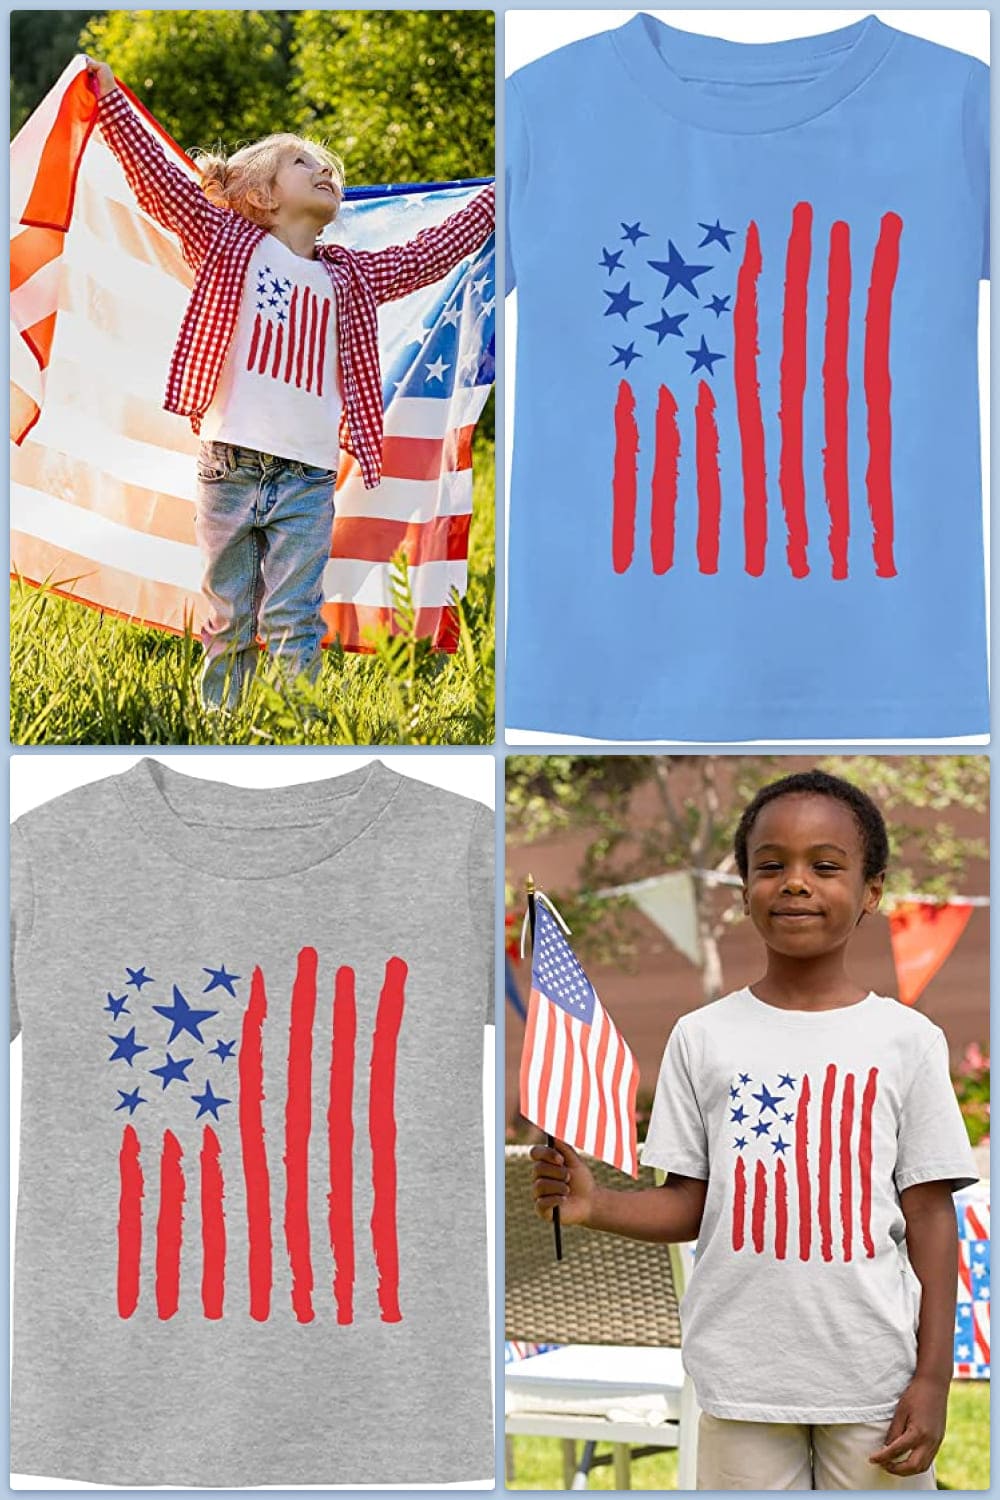 Children in American flag t-shirts.